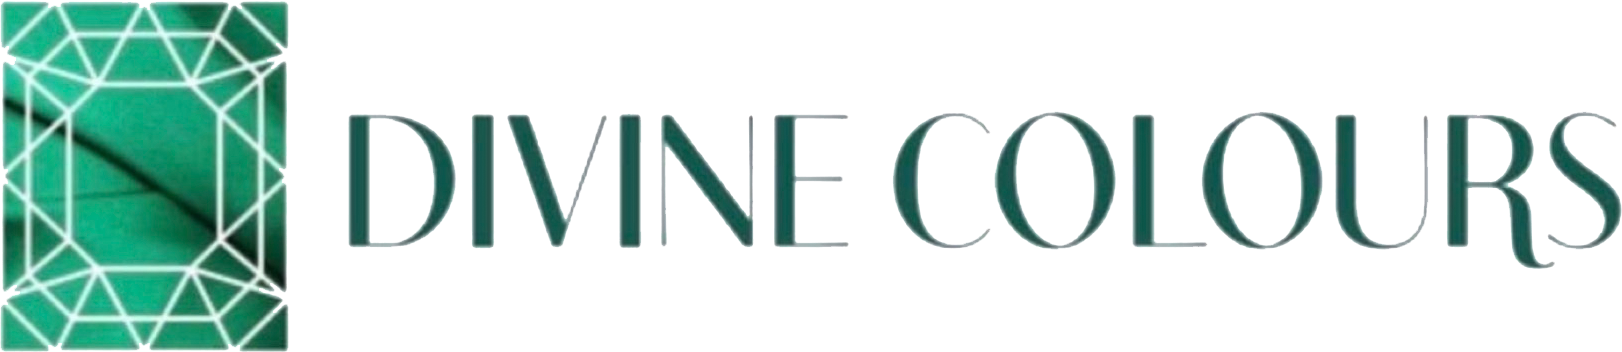 Divine Colours - Footer logo image